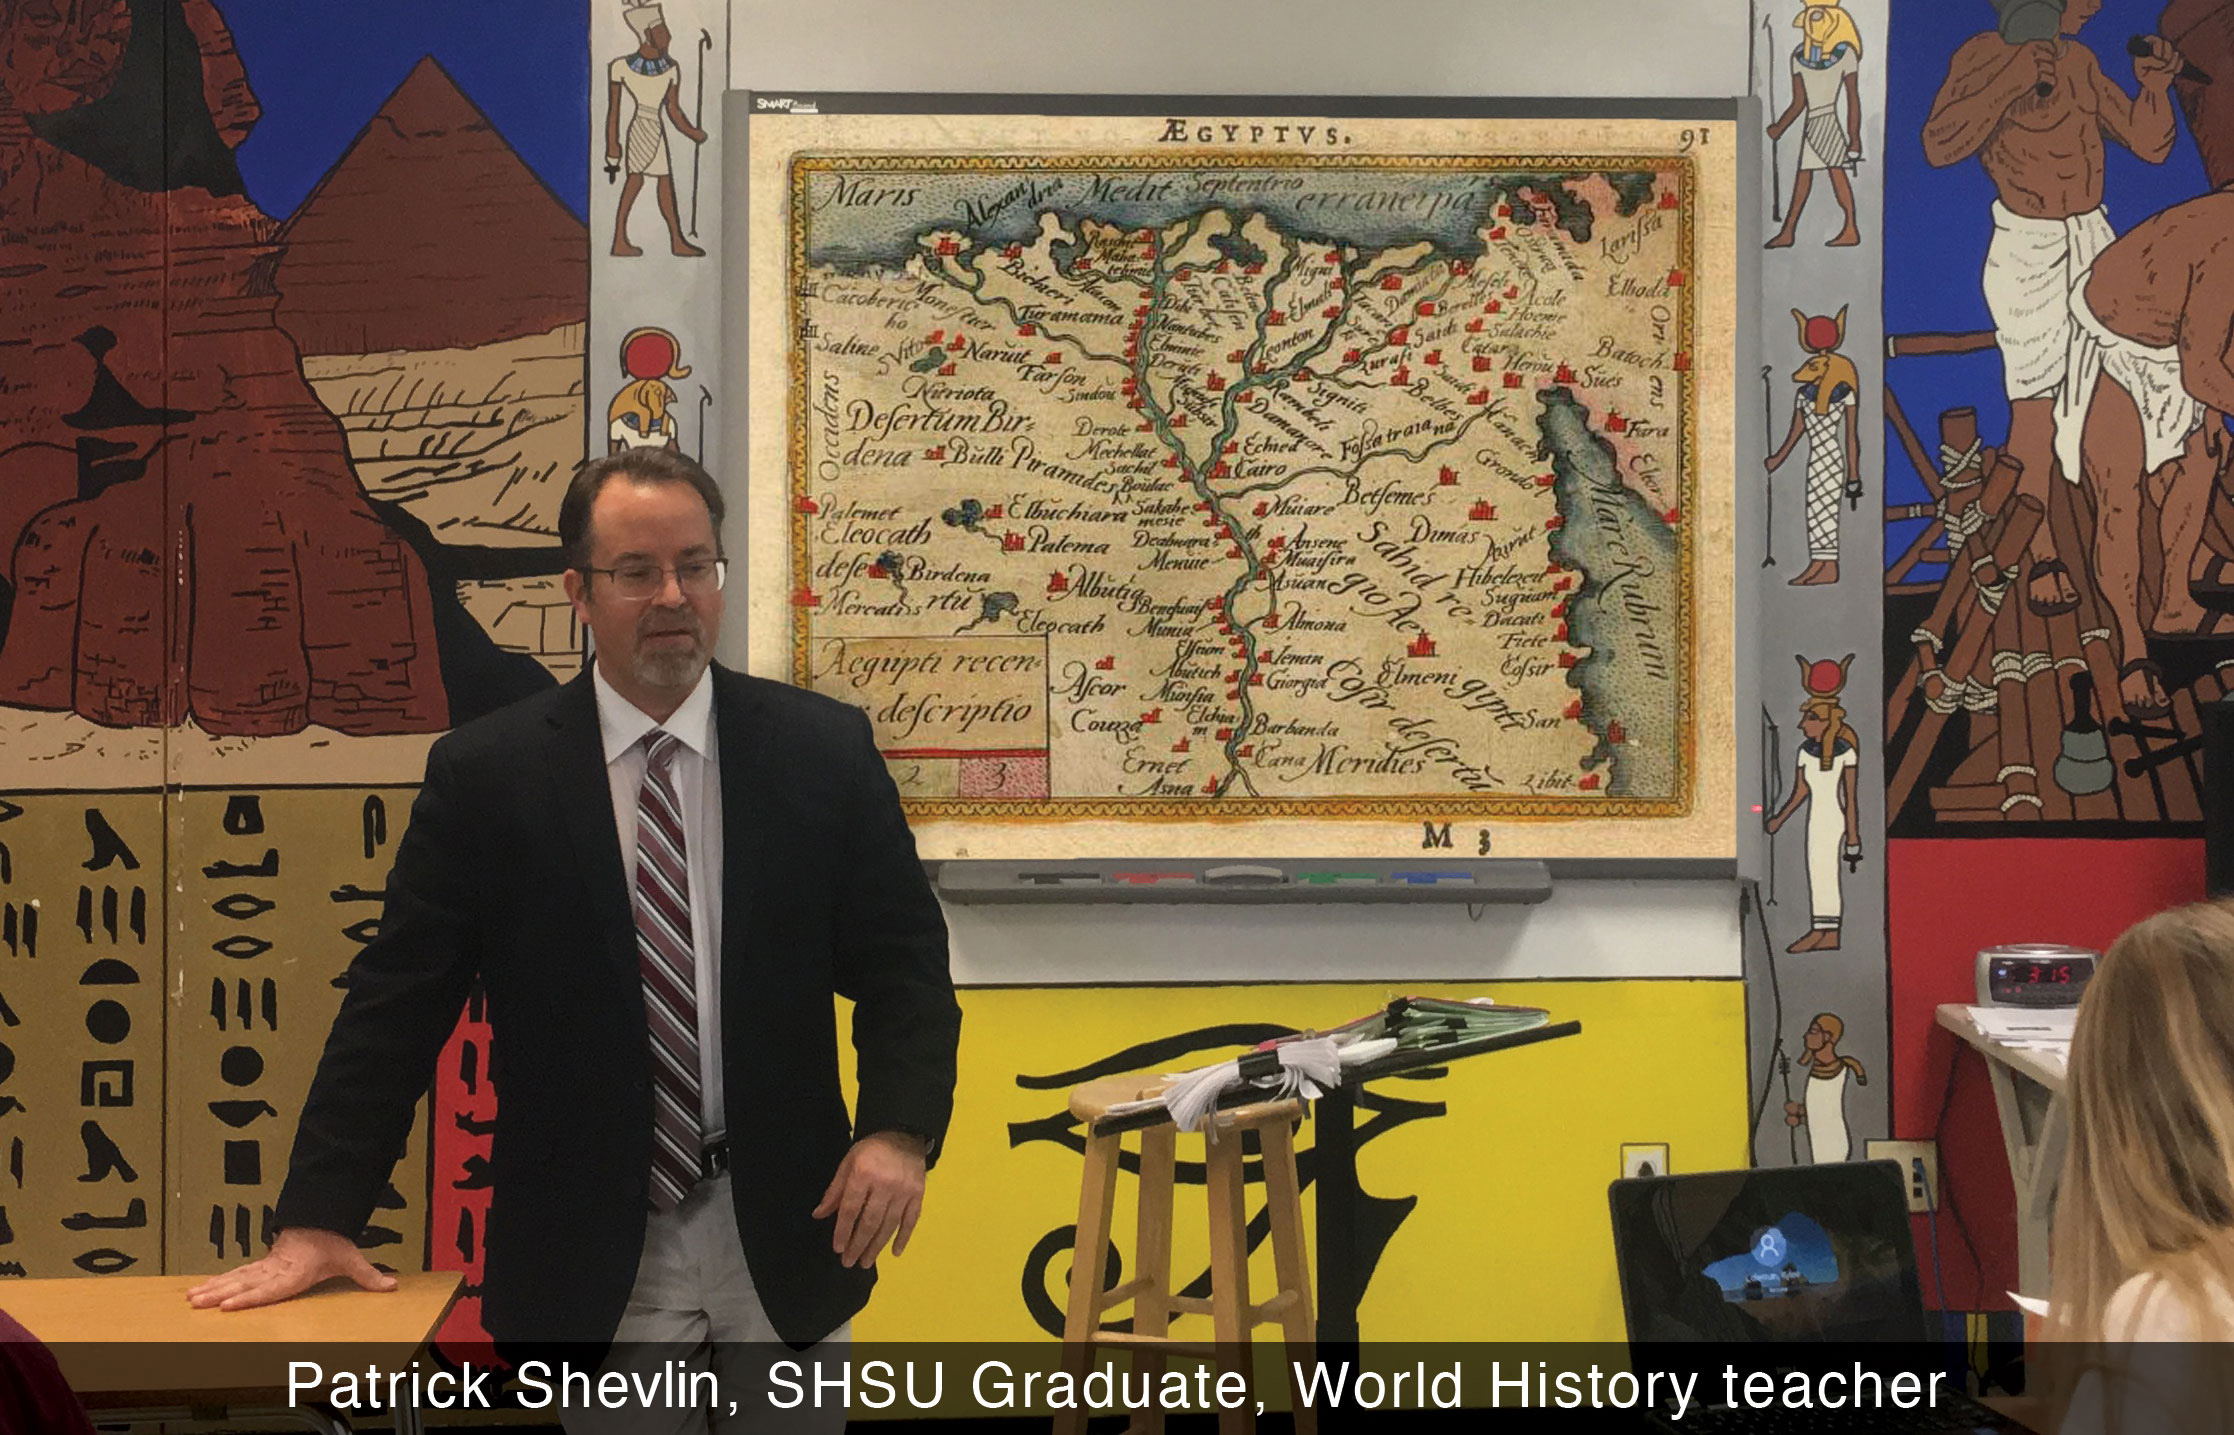 Patrick Shevlin, SHSU Graduate, World History teacher